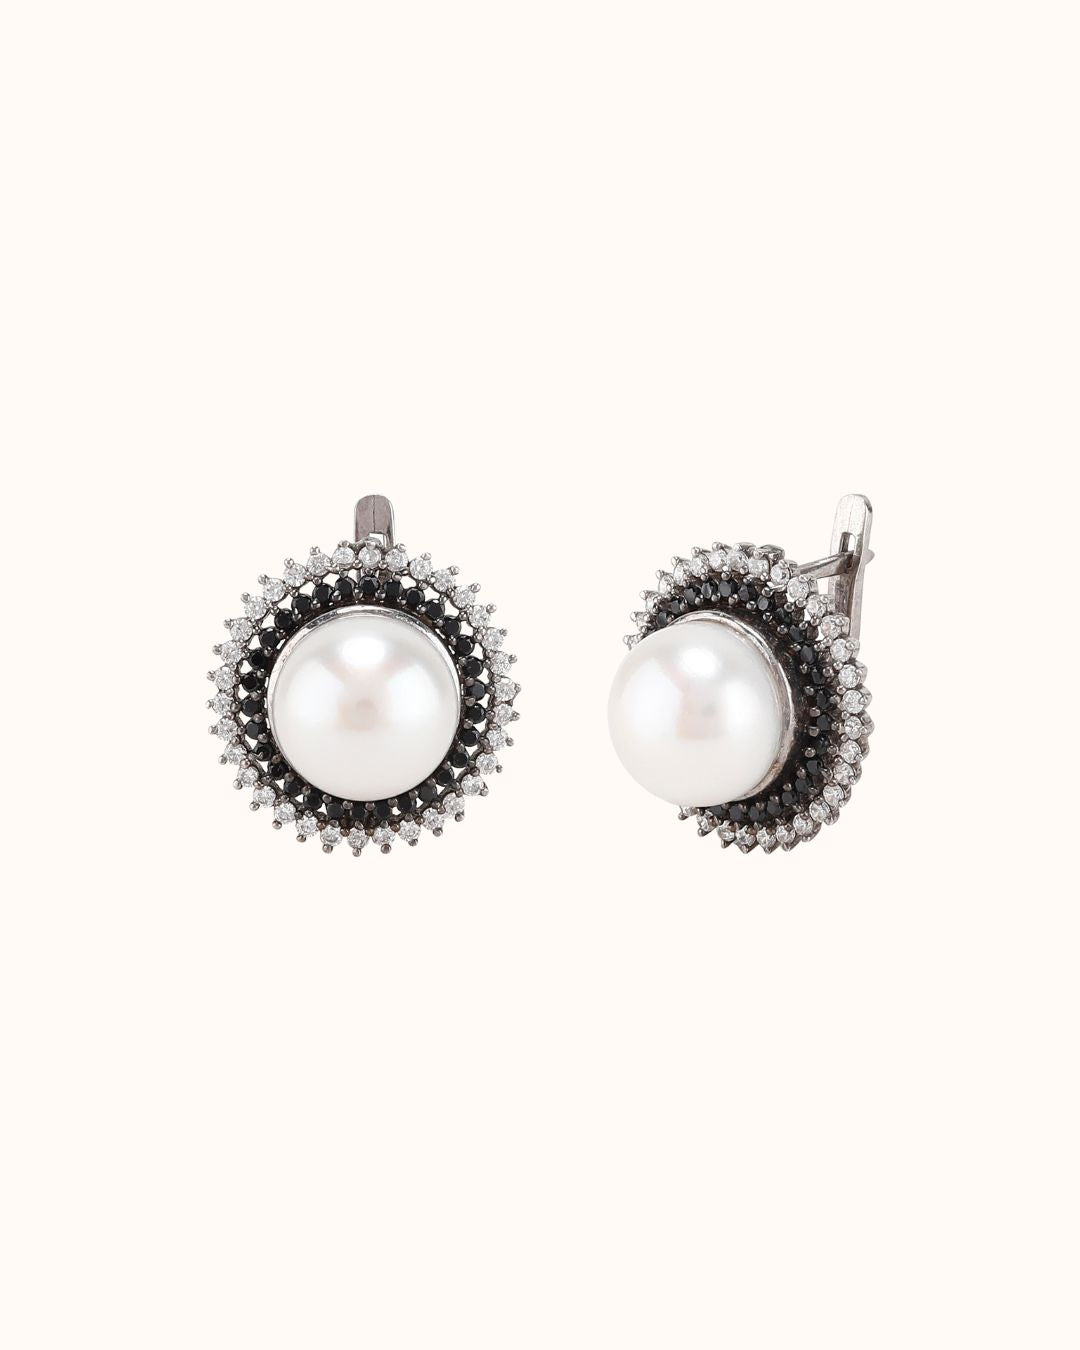 Victorian Pearl Earrings